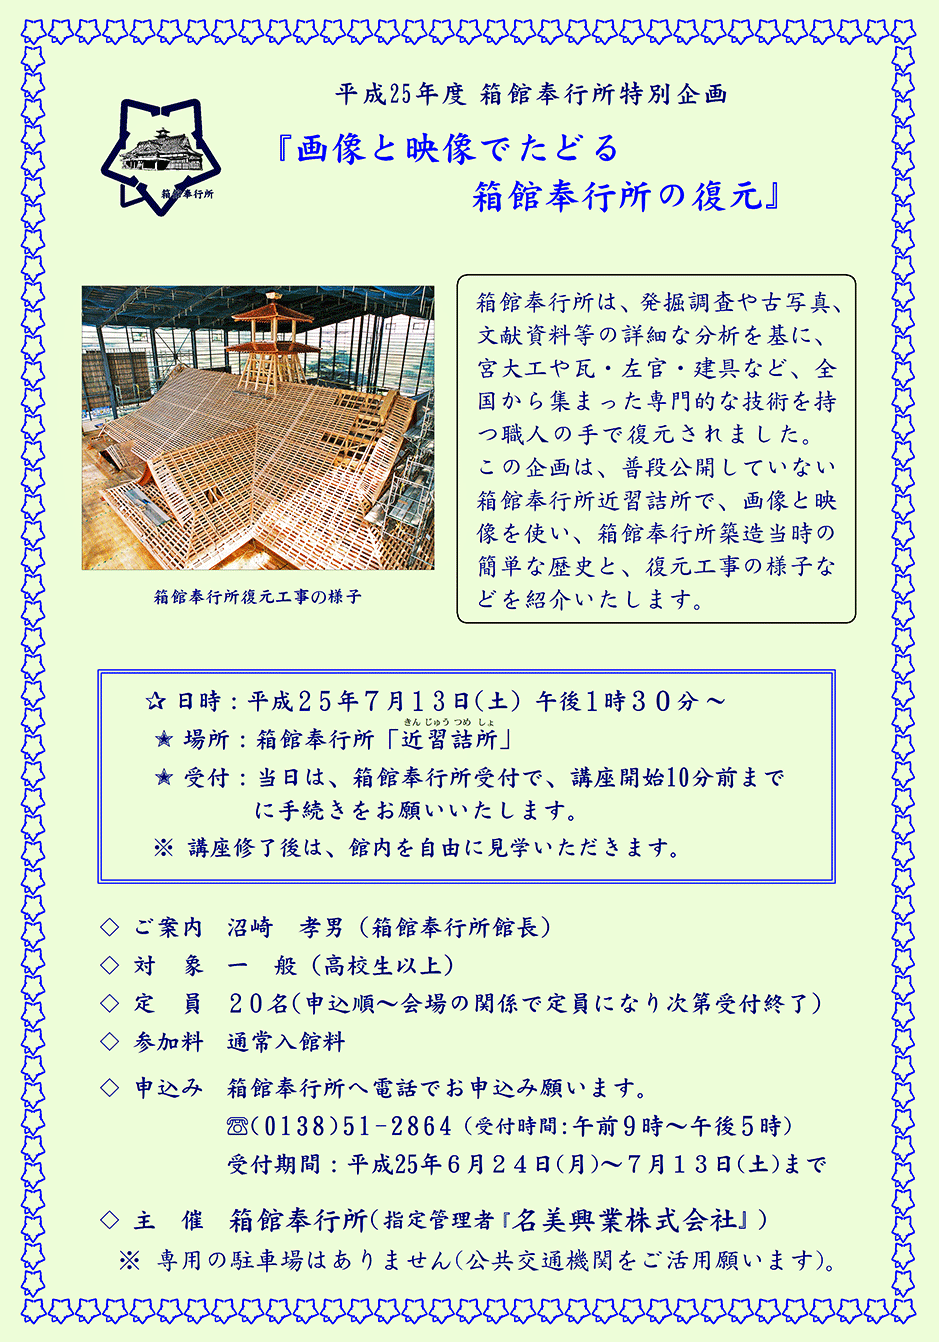 https://www.hakodate-bugyosho.jp/news-asset/images/130623_1.gif